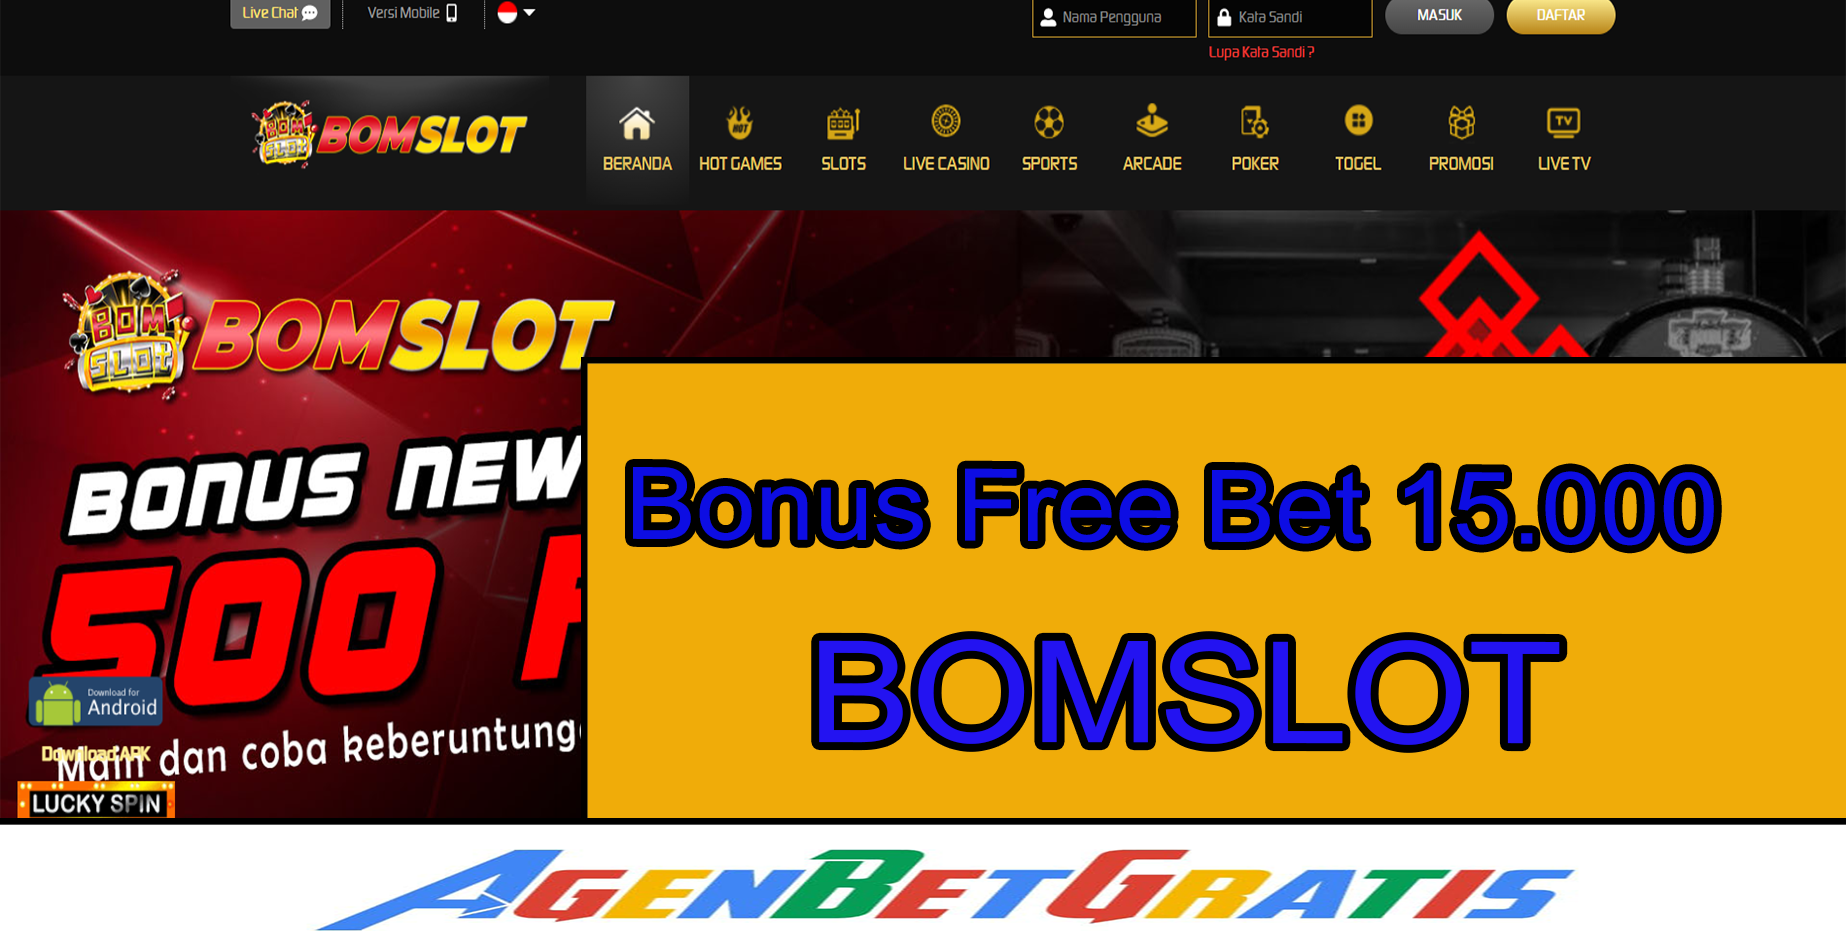 BOMSLOT - Bonus FreeBet 15.000